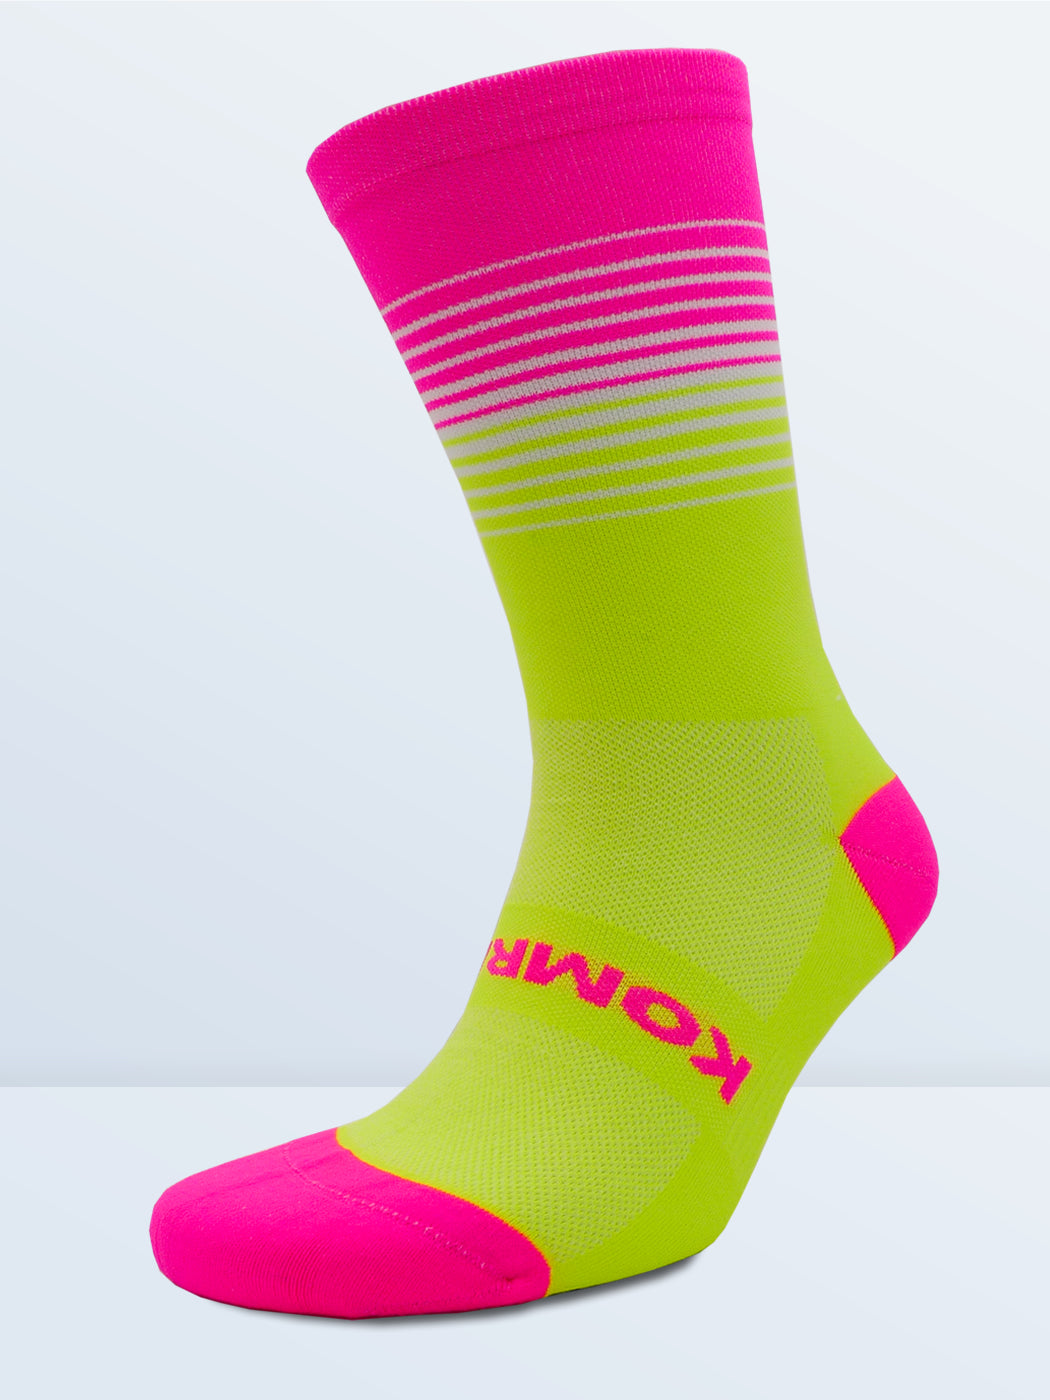 Swagger Socks - Fluro Yellow & Pink